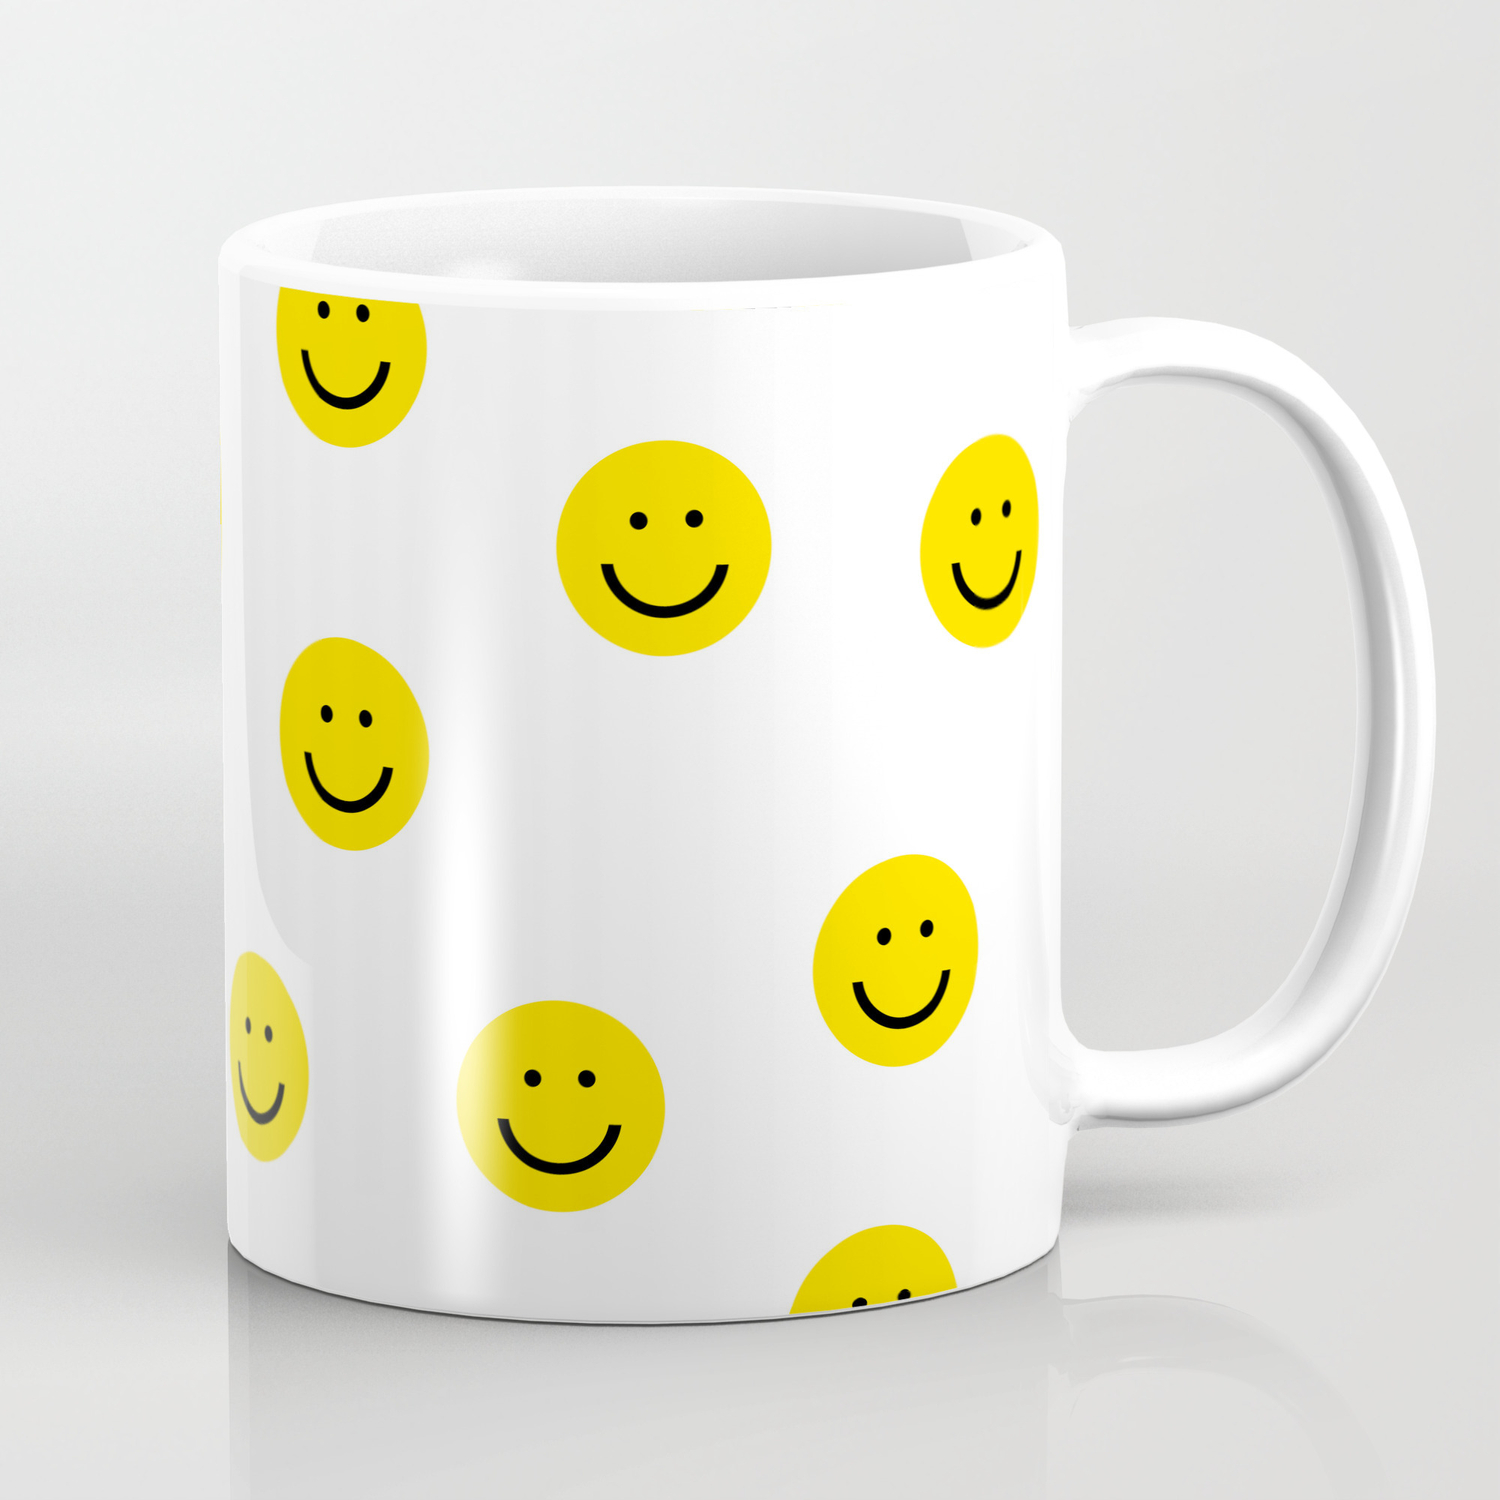 15oz Two-Tone Yellow Mug mug_291181_13 3dRose All Smiles Art Cute Funny Sea otter with Smiley face Balloon Cartoon Funny 